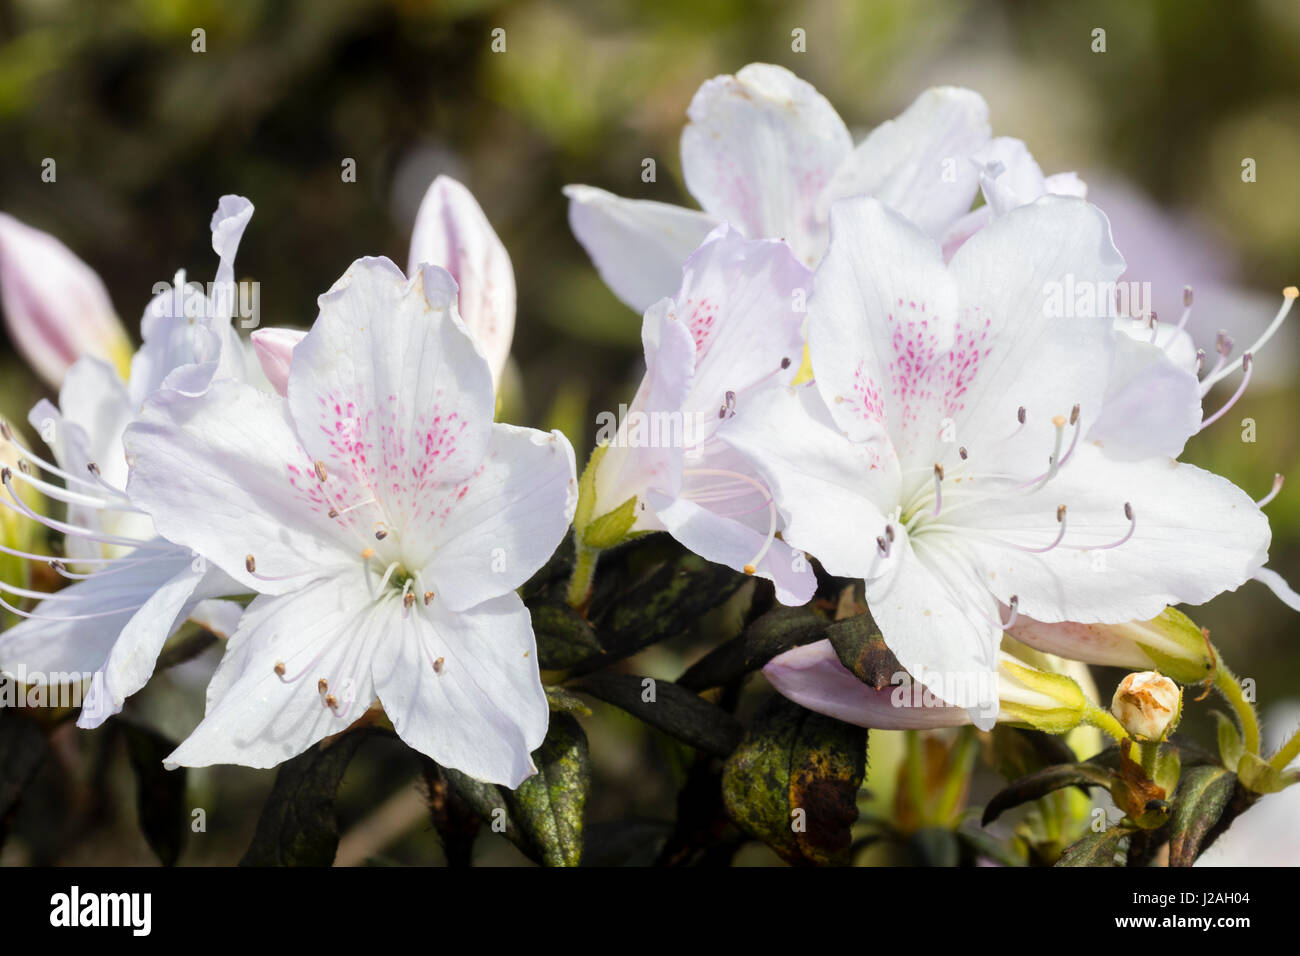 Spring flowers of the azalea, Rhododendron ledifolium var. ripense.  This is now known as Rhododendron mucronatum var. ripense. Stock Photo